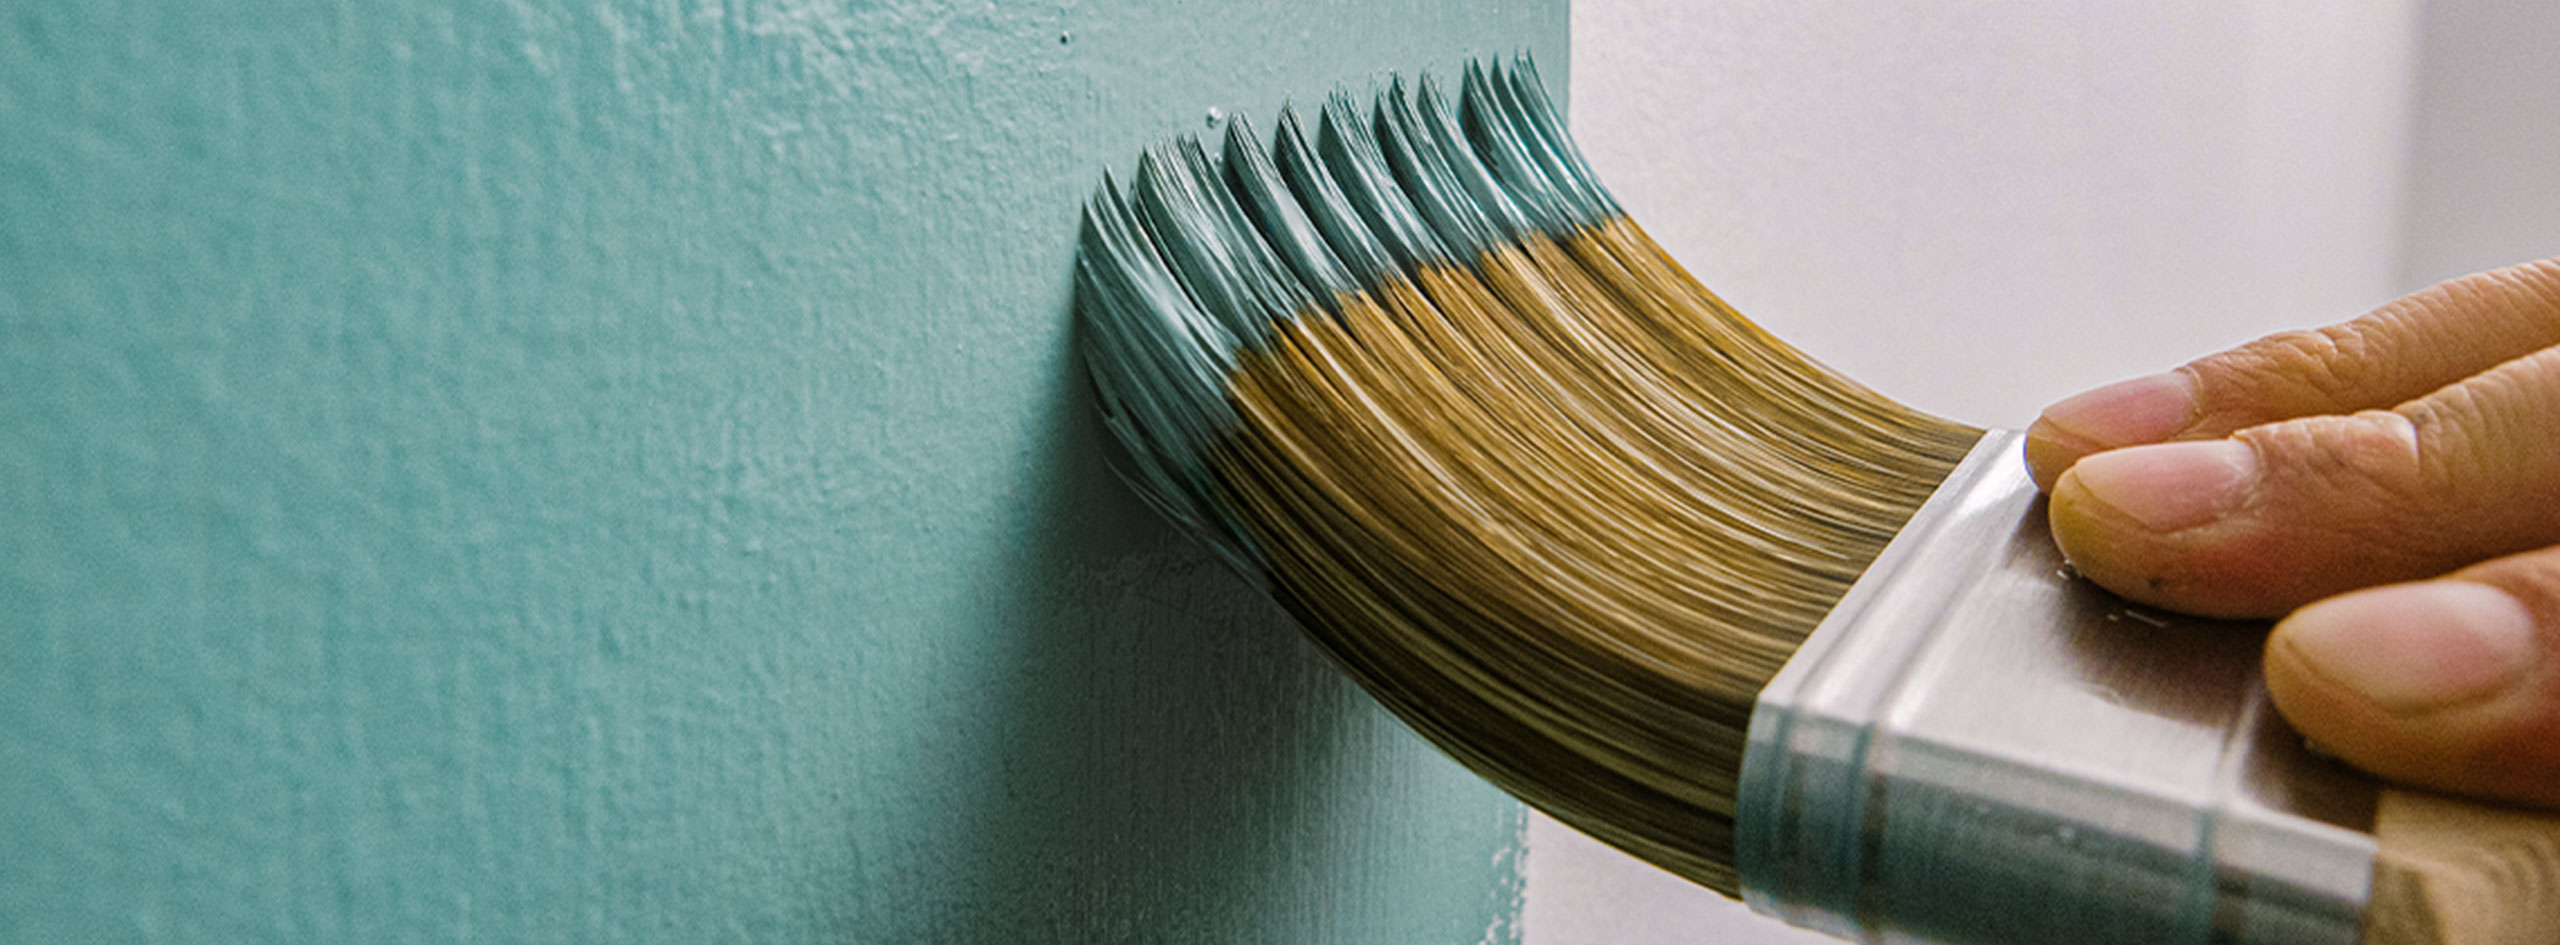 Paint Roller Painting Brush Set Home Interior Improvement Supplies